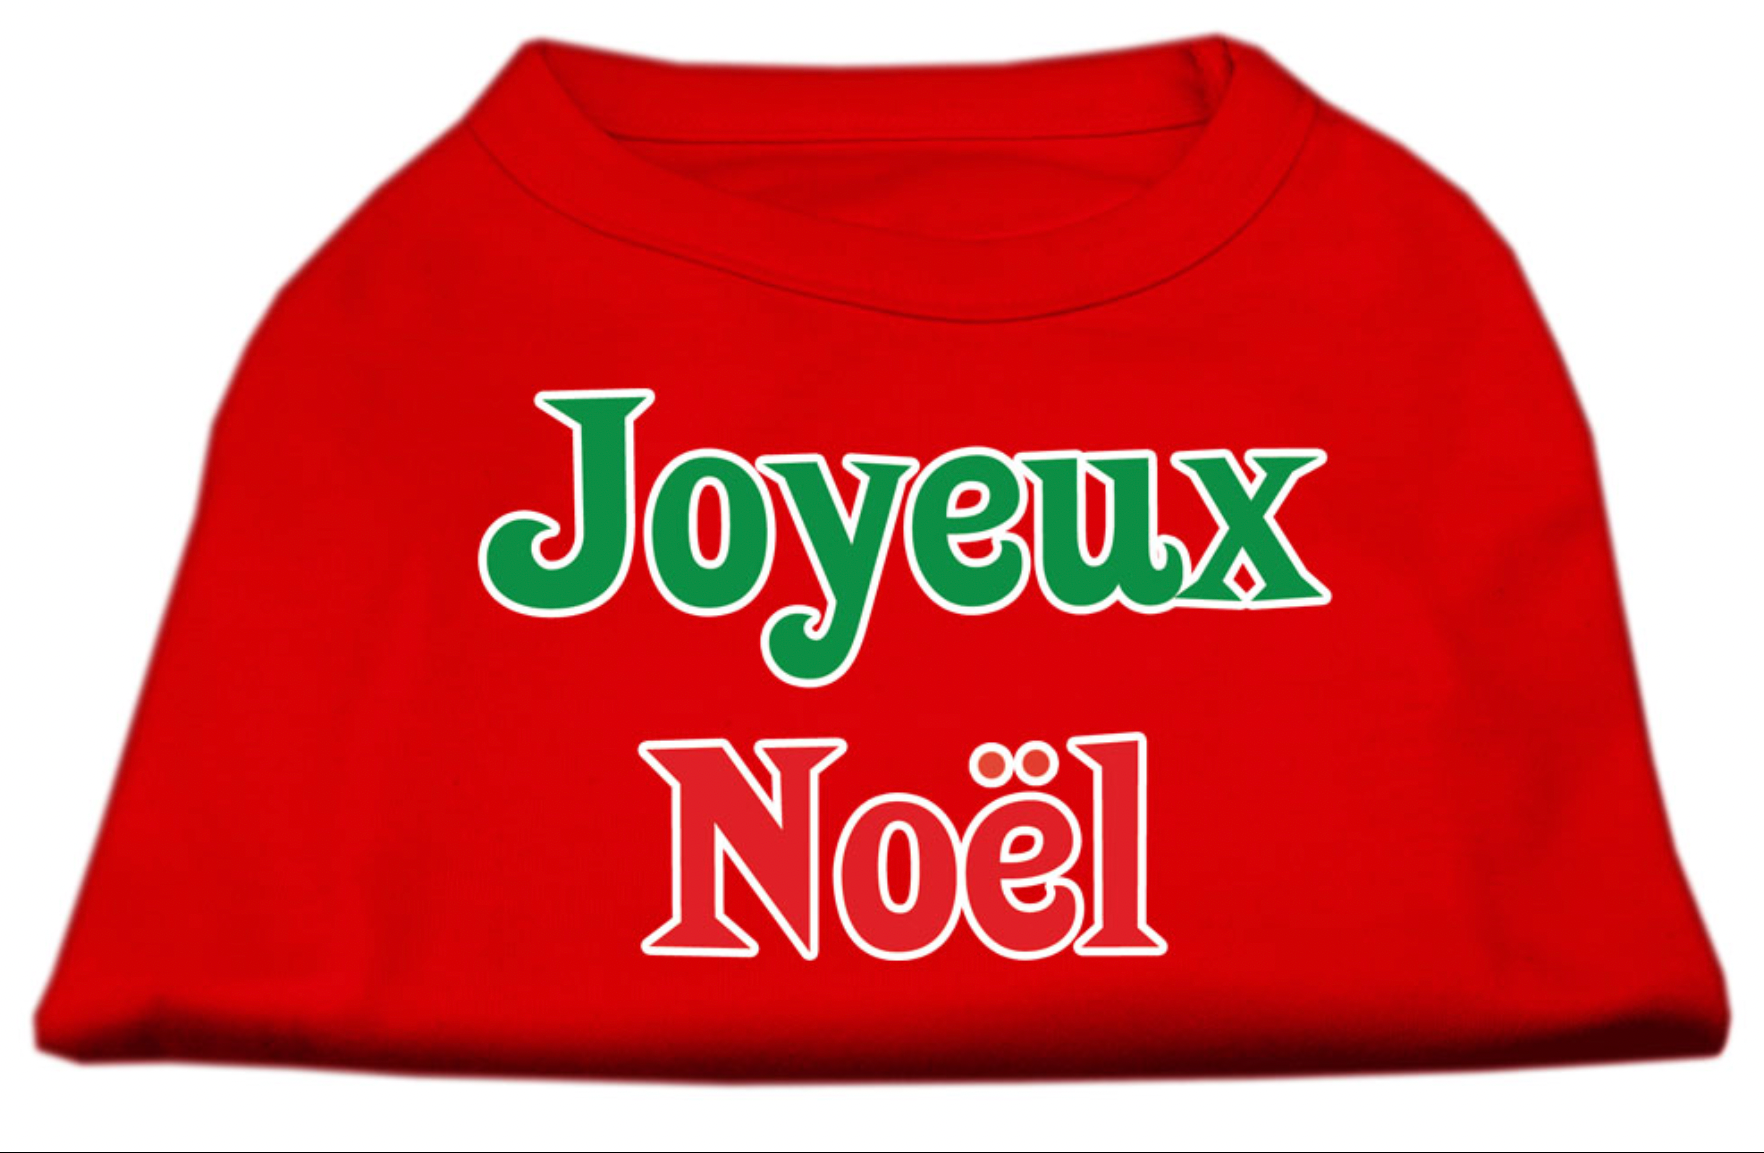 JOYEUX NOEL SCREEN PRINT SHIRTS RED.